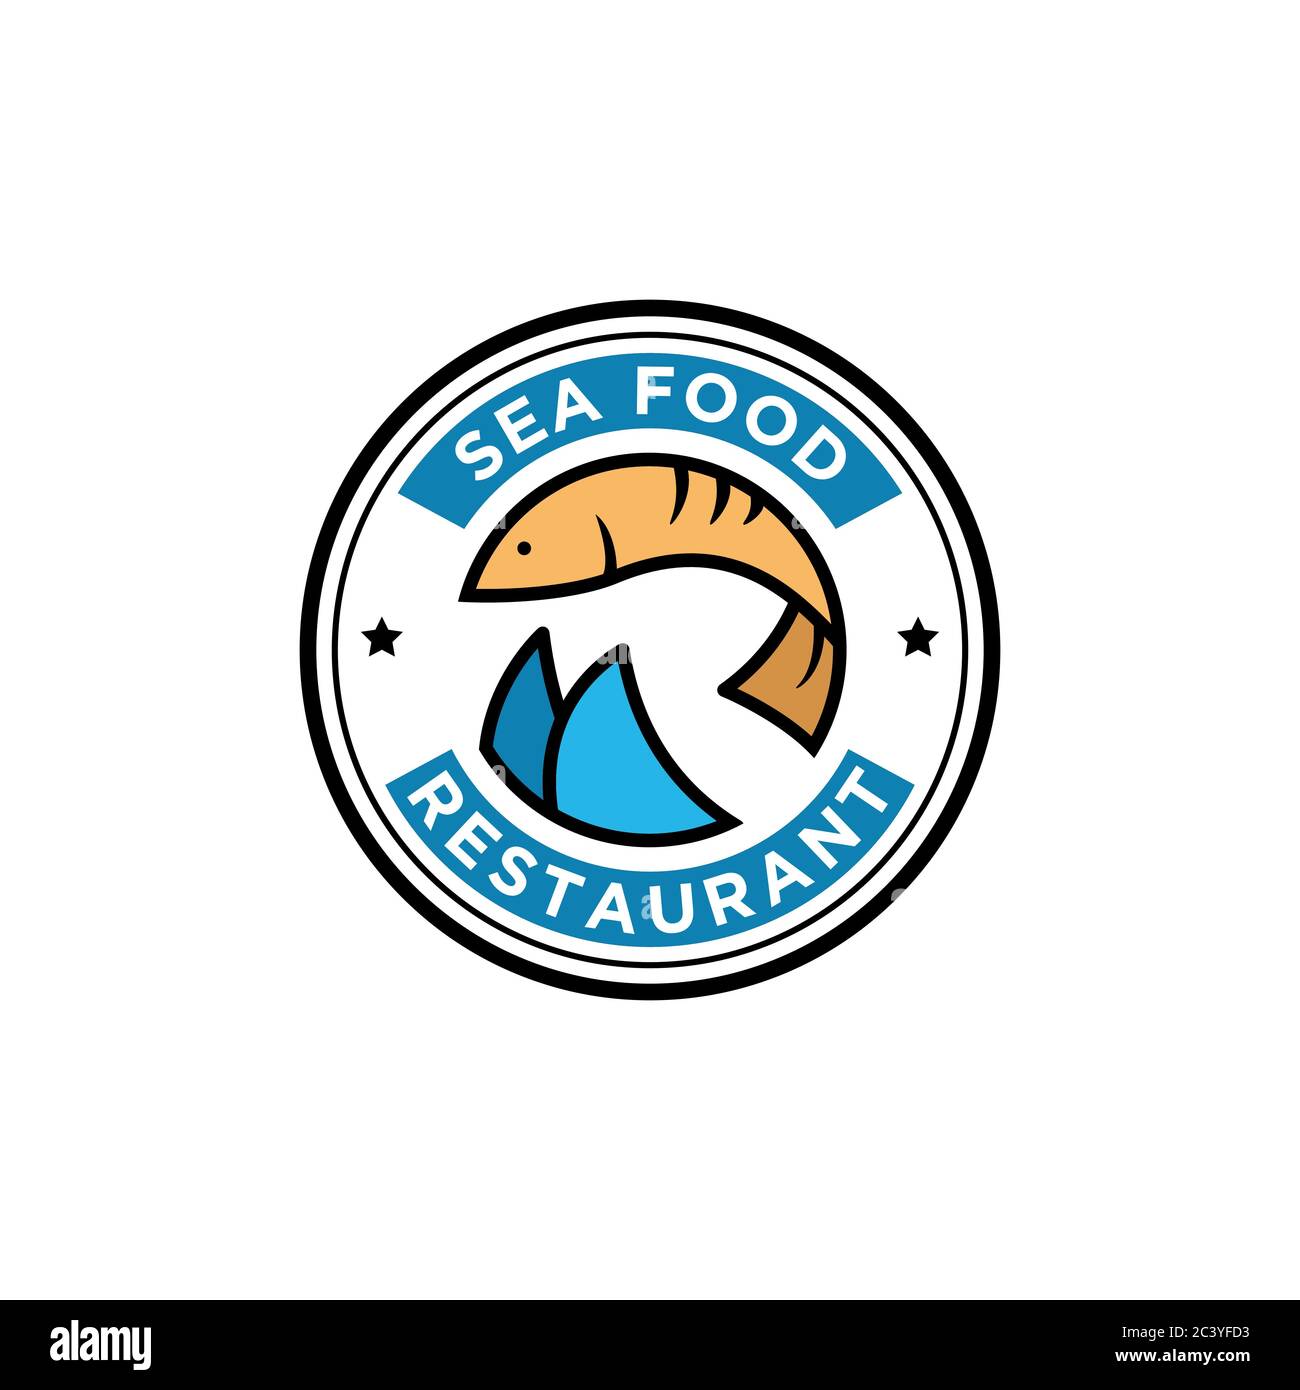 Fresh Fish Seafood Restaurant Logo Design, Lebensmittel und Getränke Vektor Illustration gut für Business Logo Marke Stock Vektor